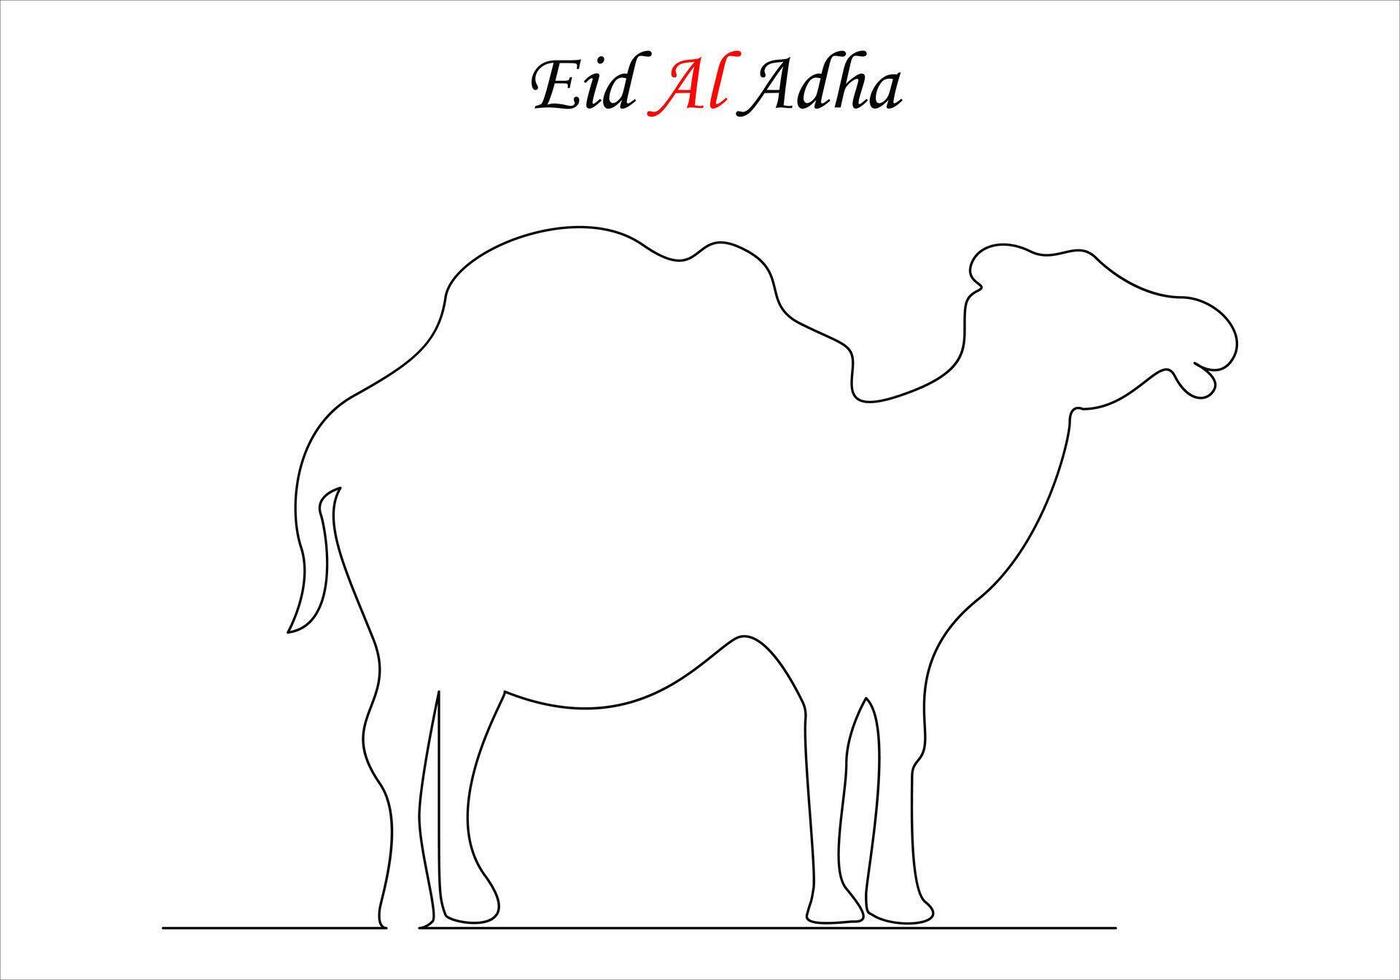 kontinuerlig ett linje teckning av eid al Adha ut linje vektor konst illustration